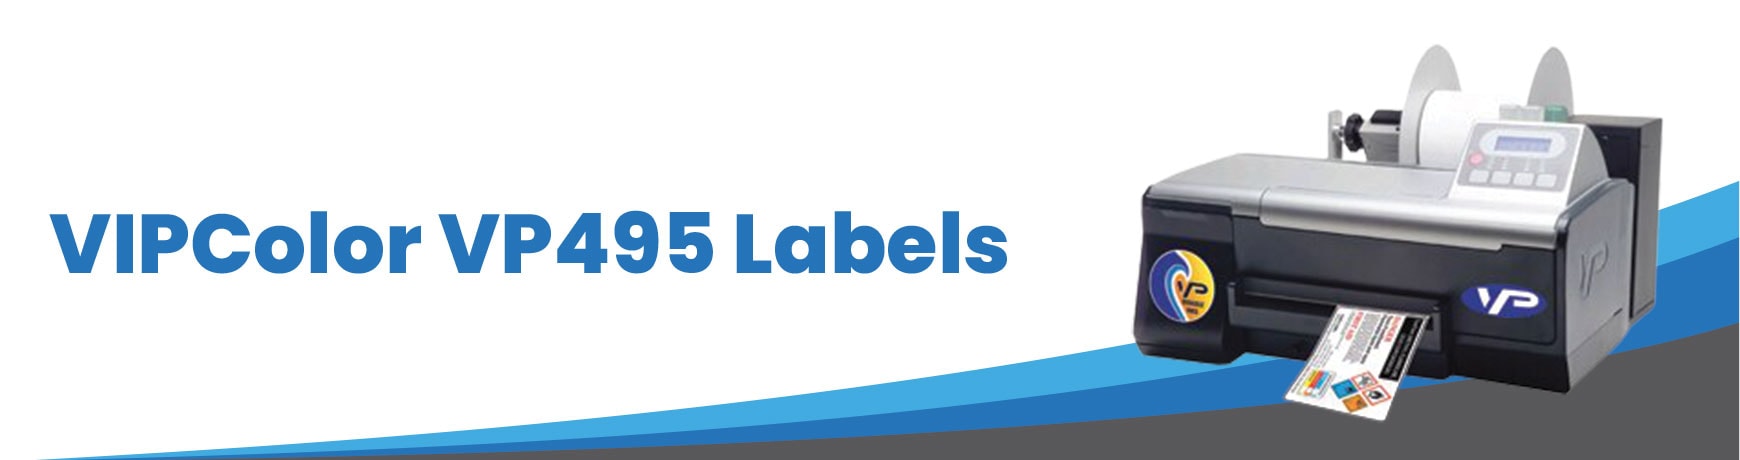 VIPColor VP495 Labels